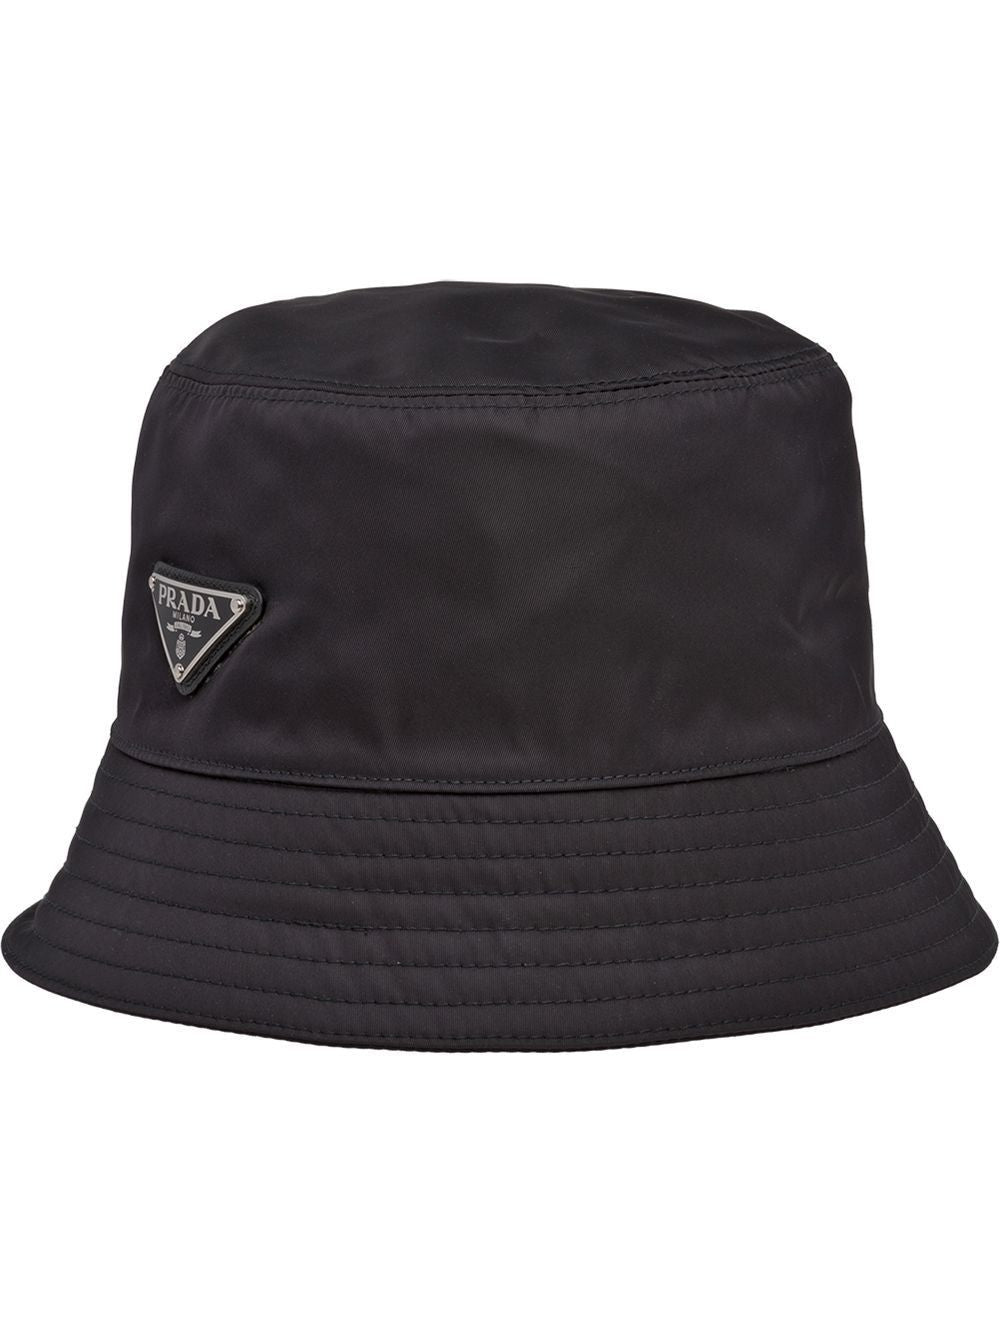 Prada Trendy Black Bucket Hat For Men